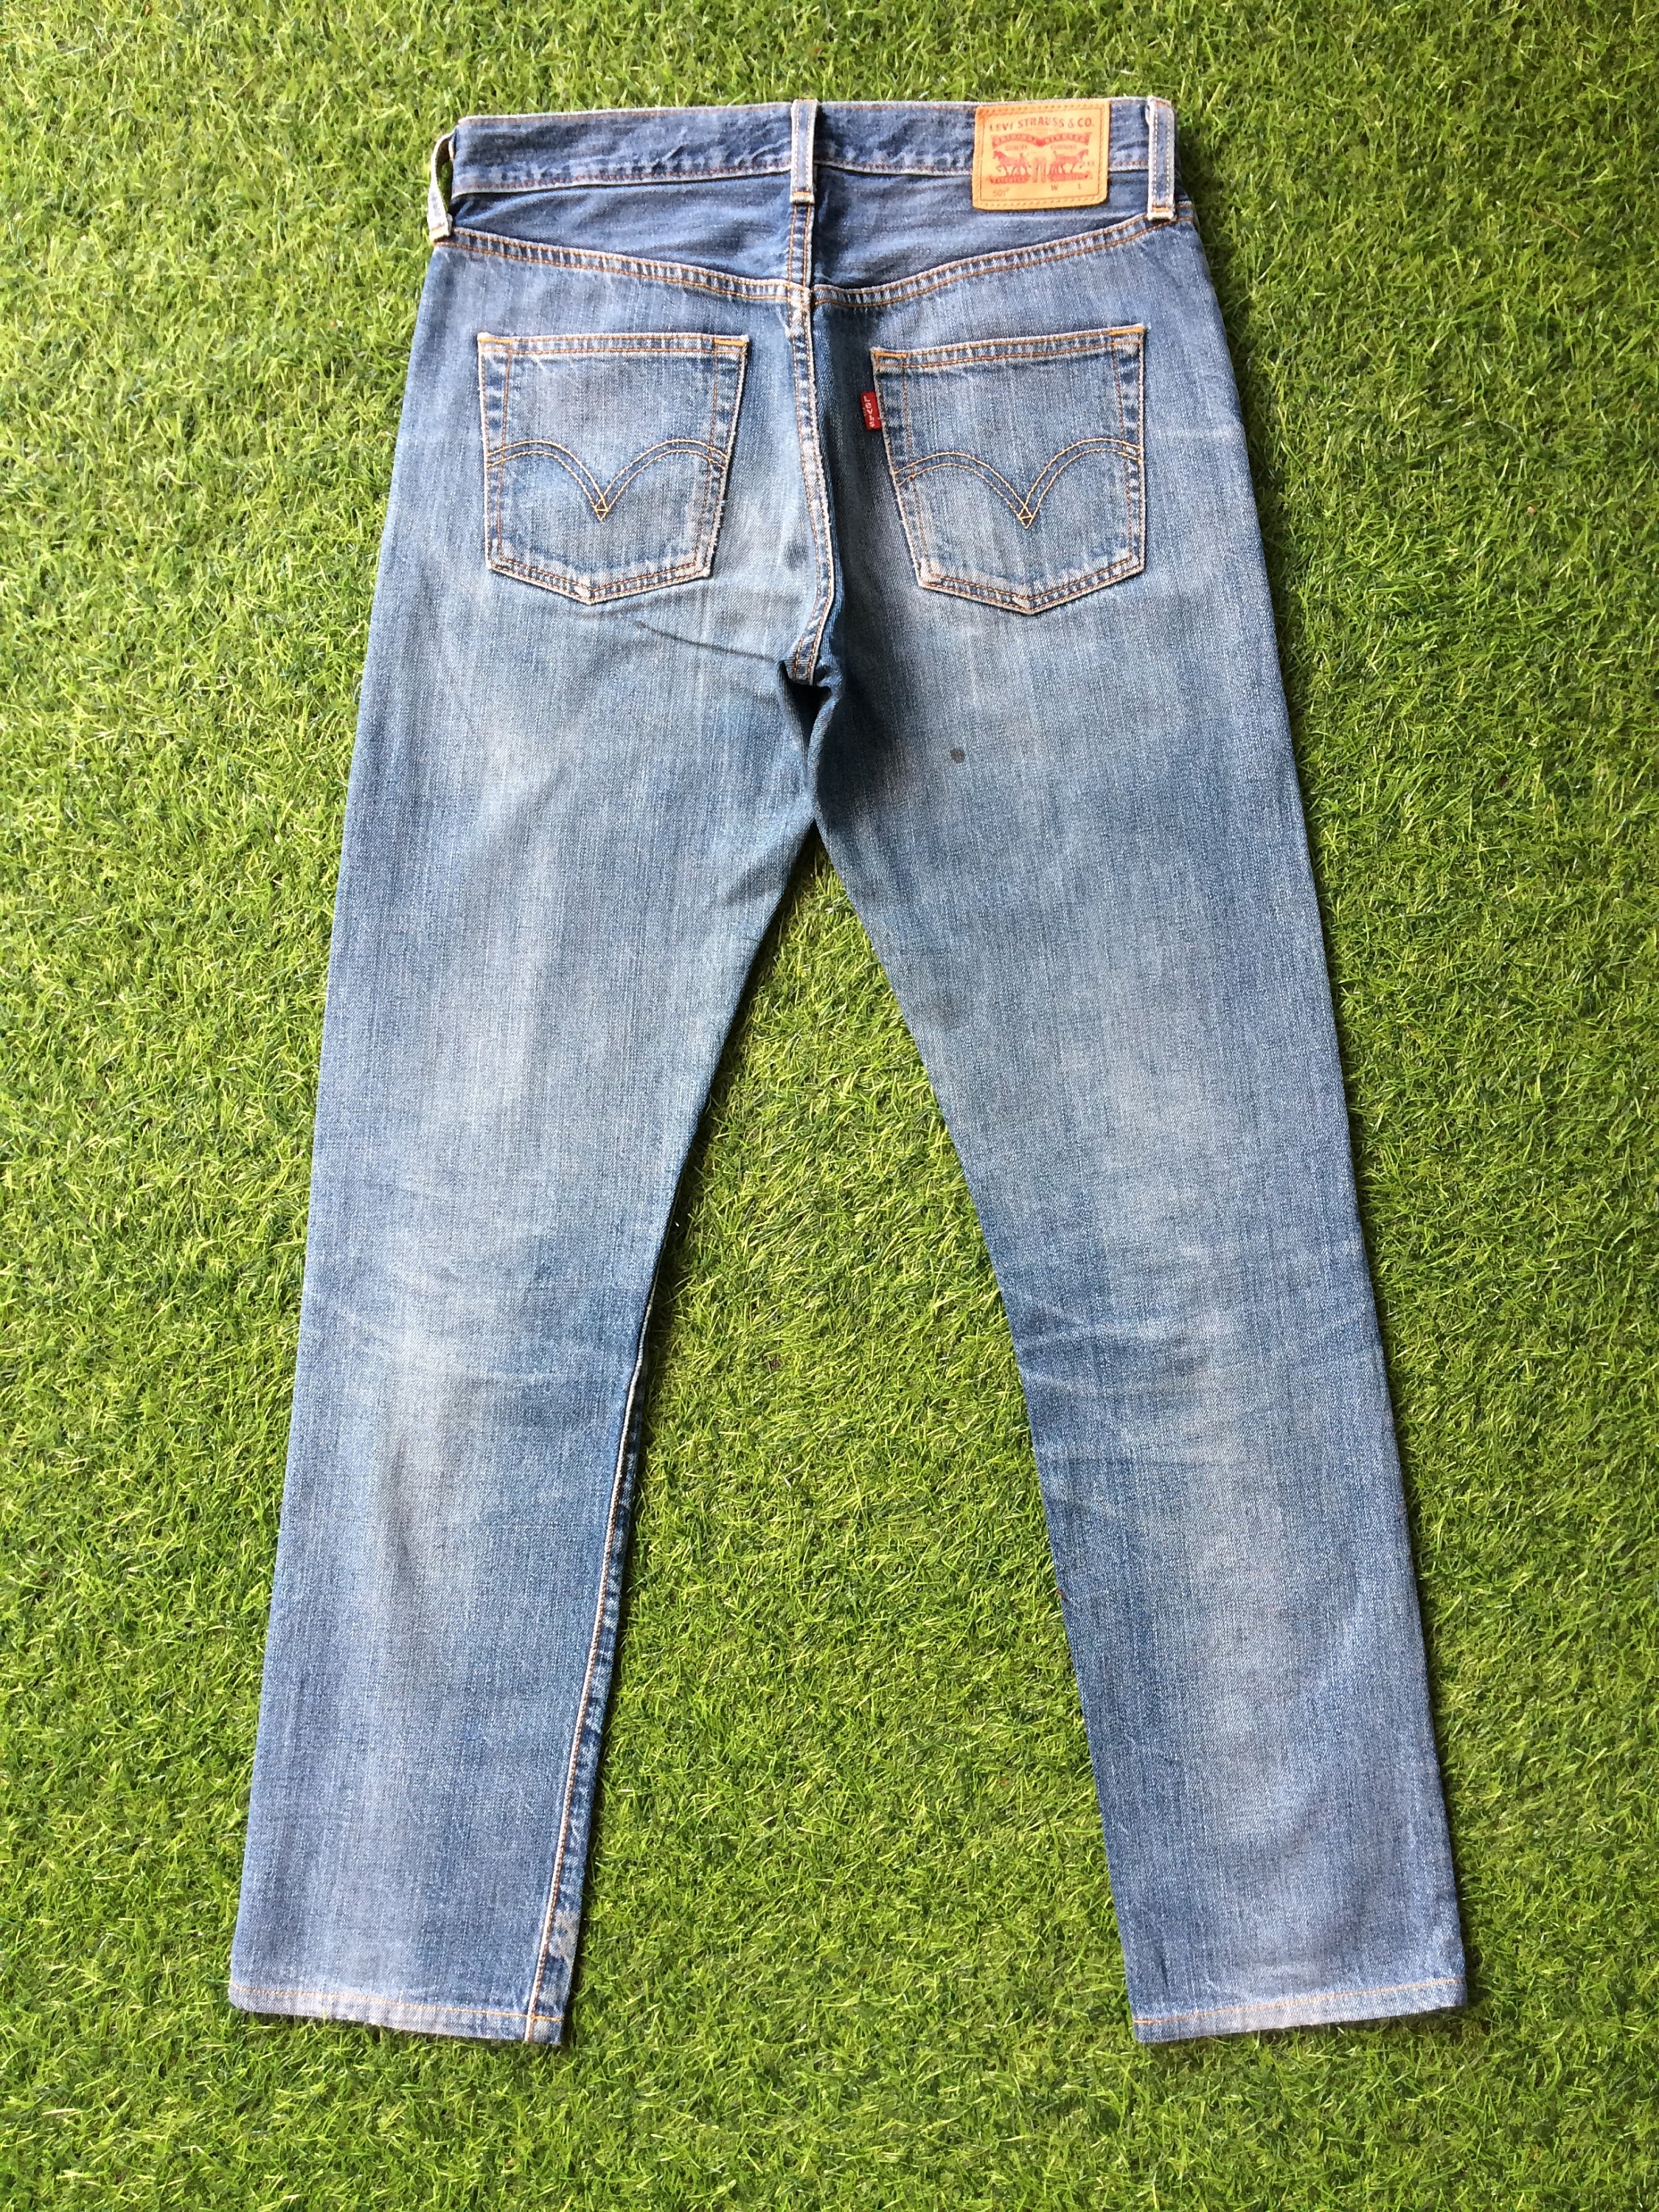 Size 30 Vintage Distressed Levis 501 Jeans Faded Medium Washed Blue Denim  W30 L30 Slim Fit Tapered Leg Jeans Waist 30 -  Canada